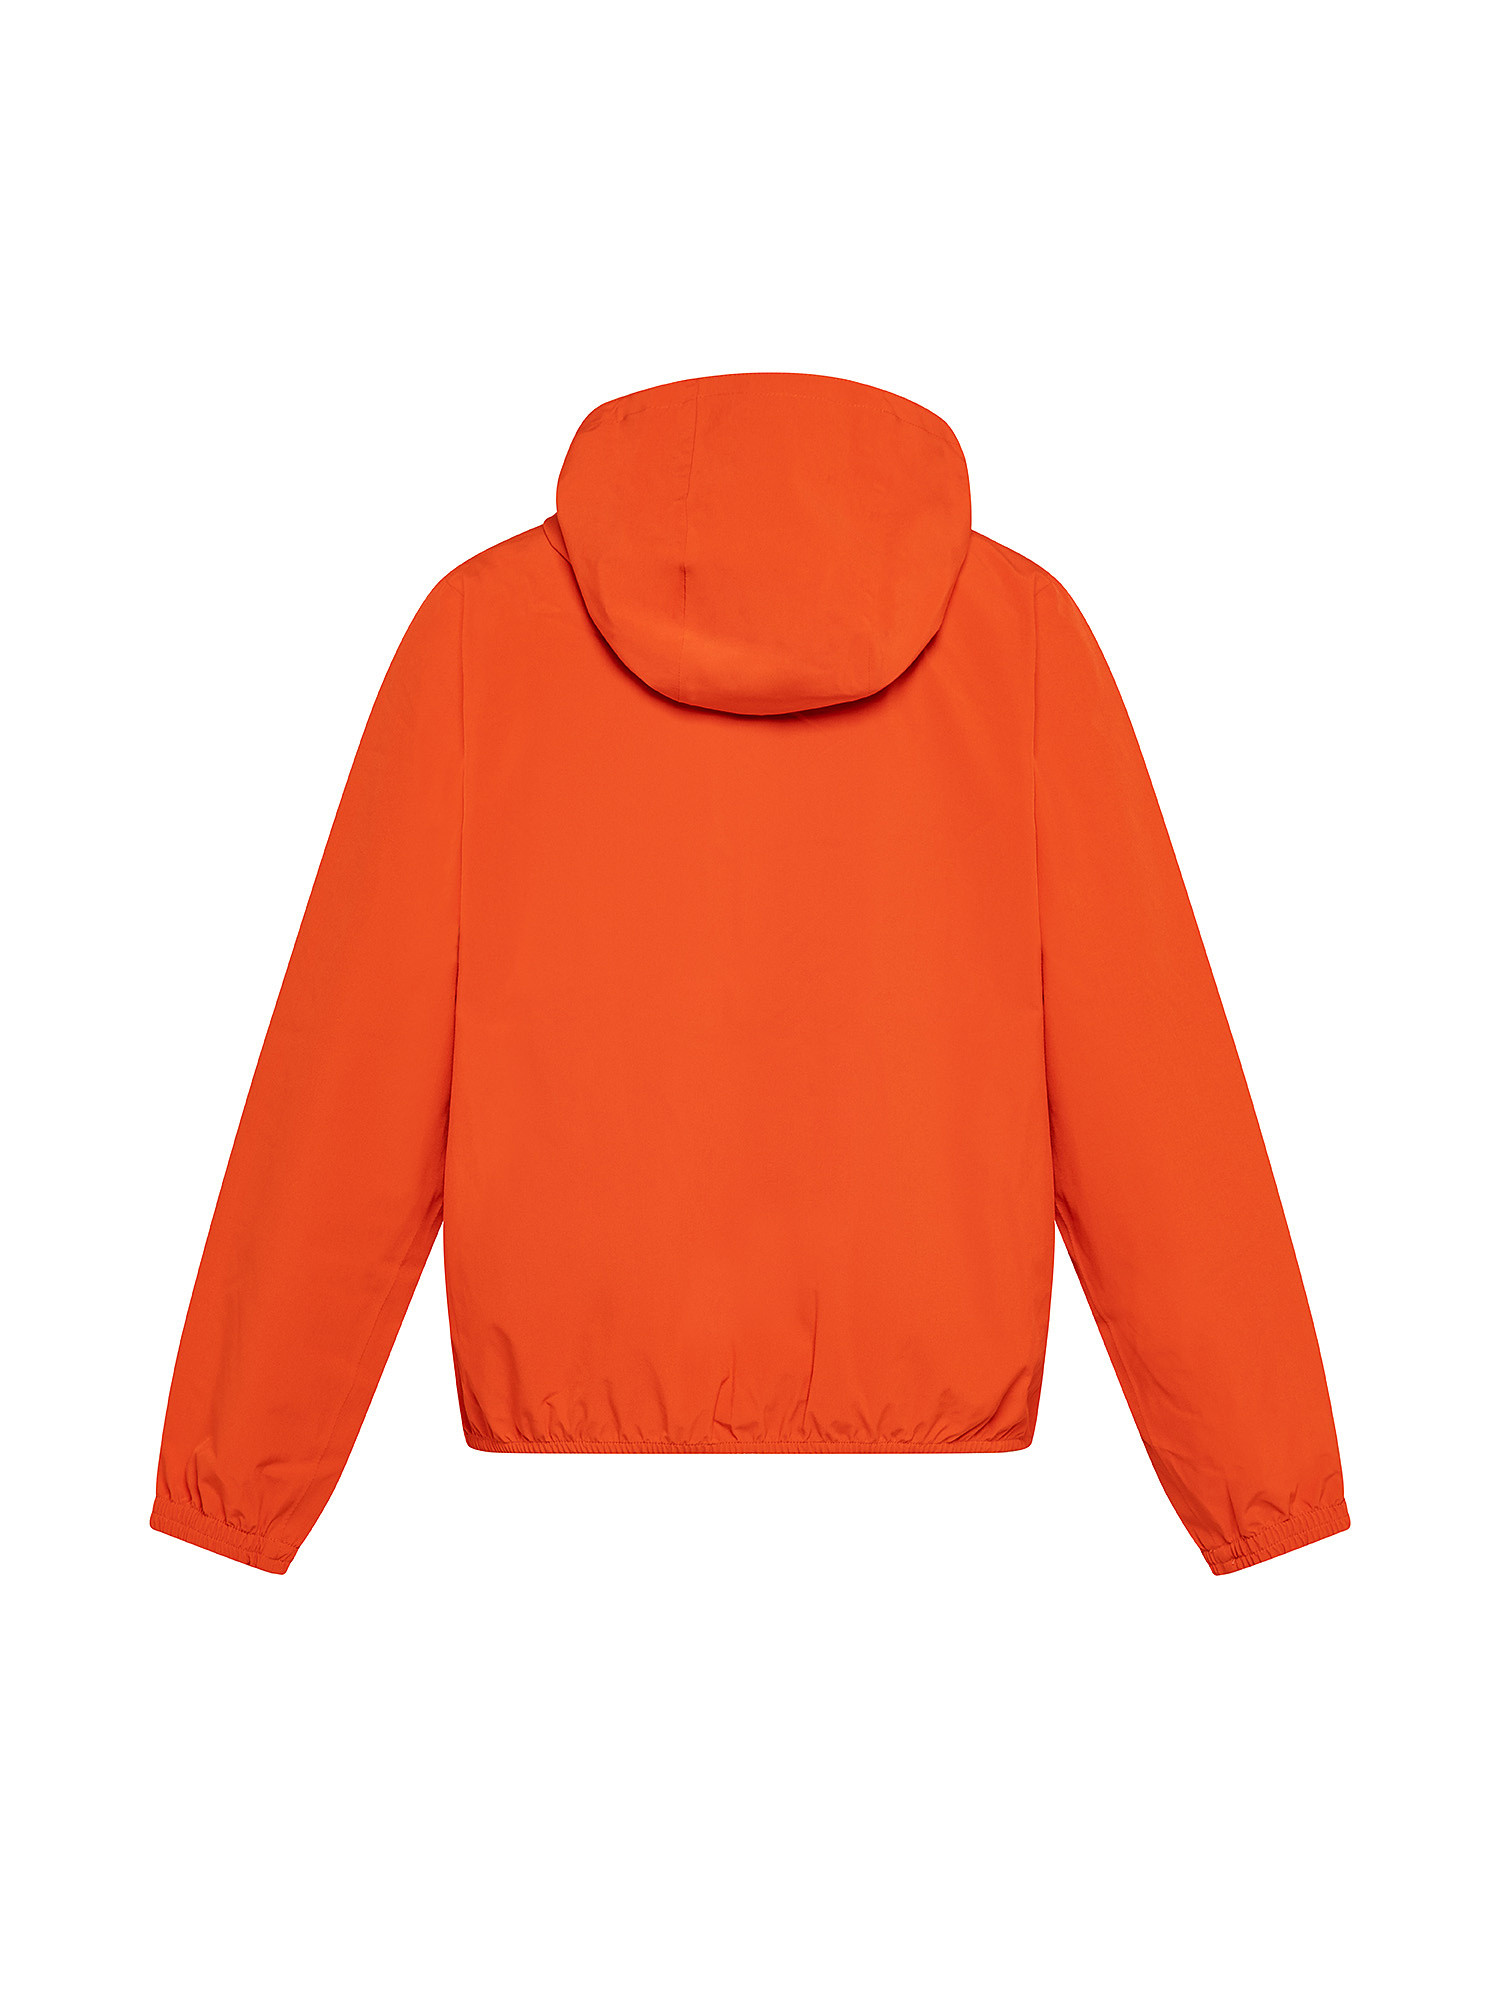 Waterproof boy jacket, Orange, large image number 1